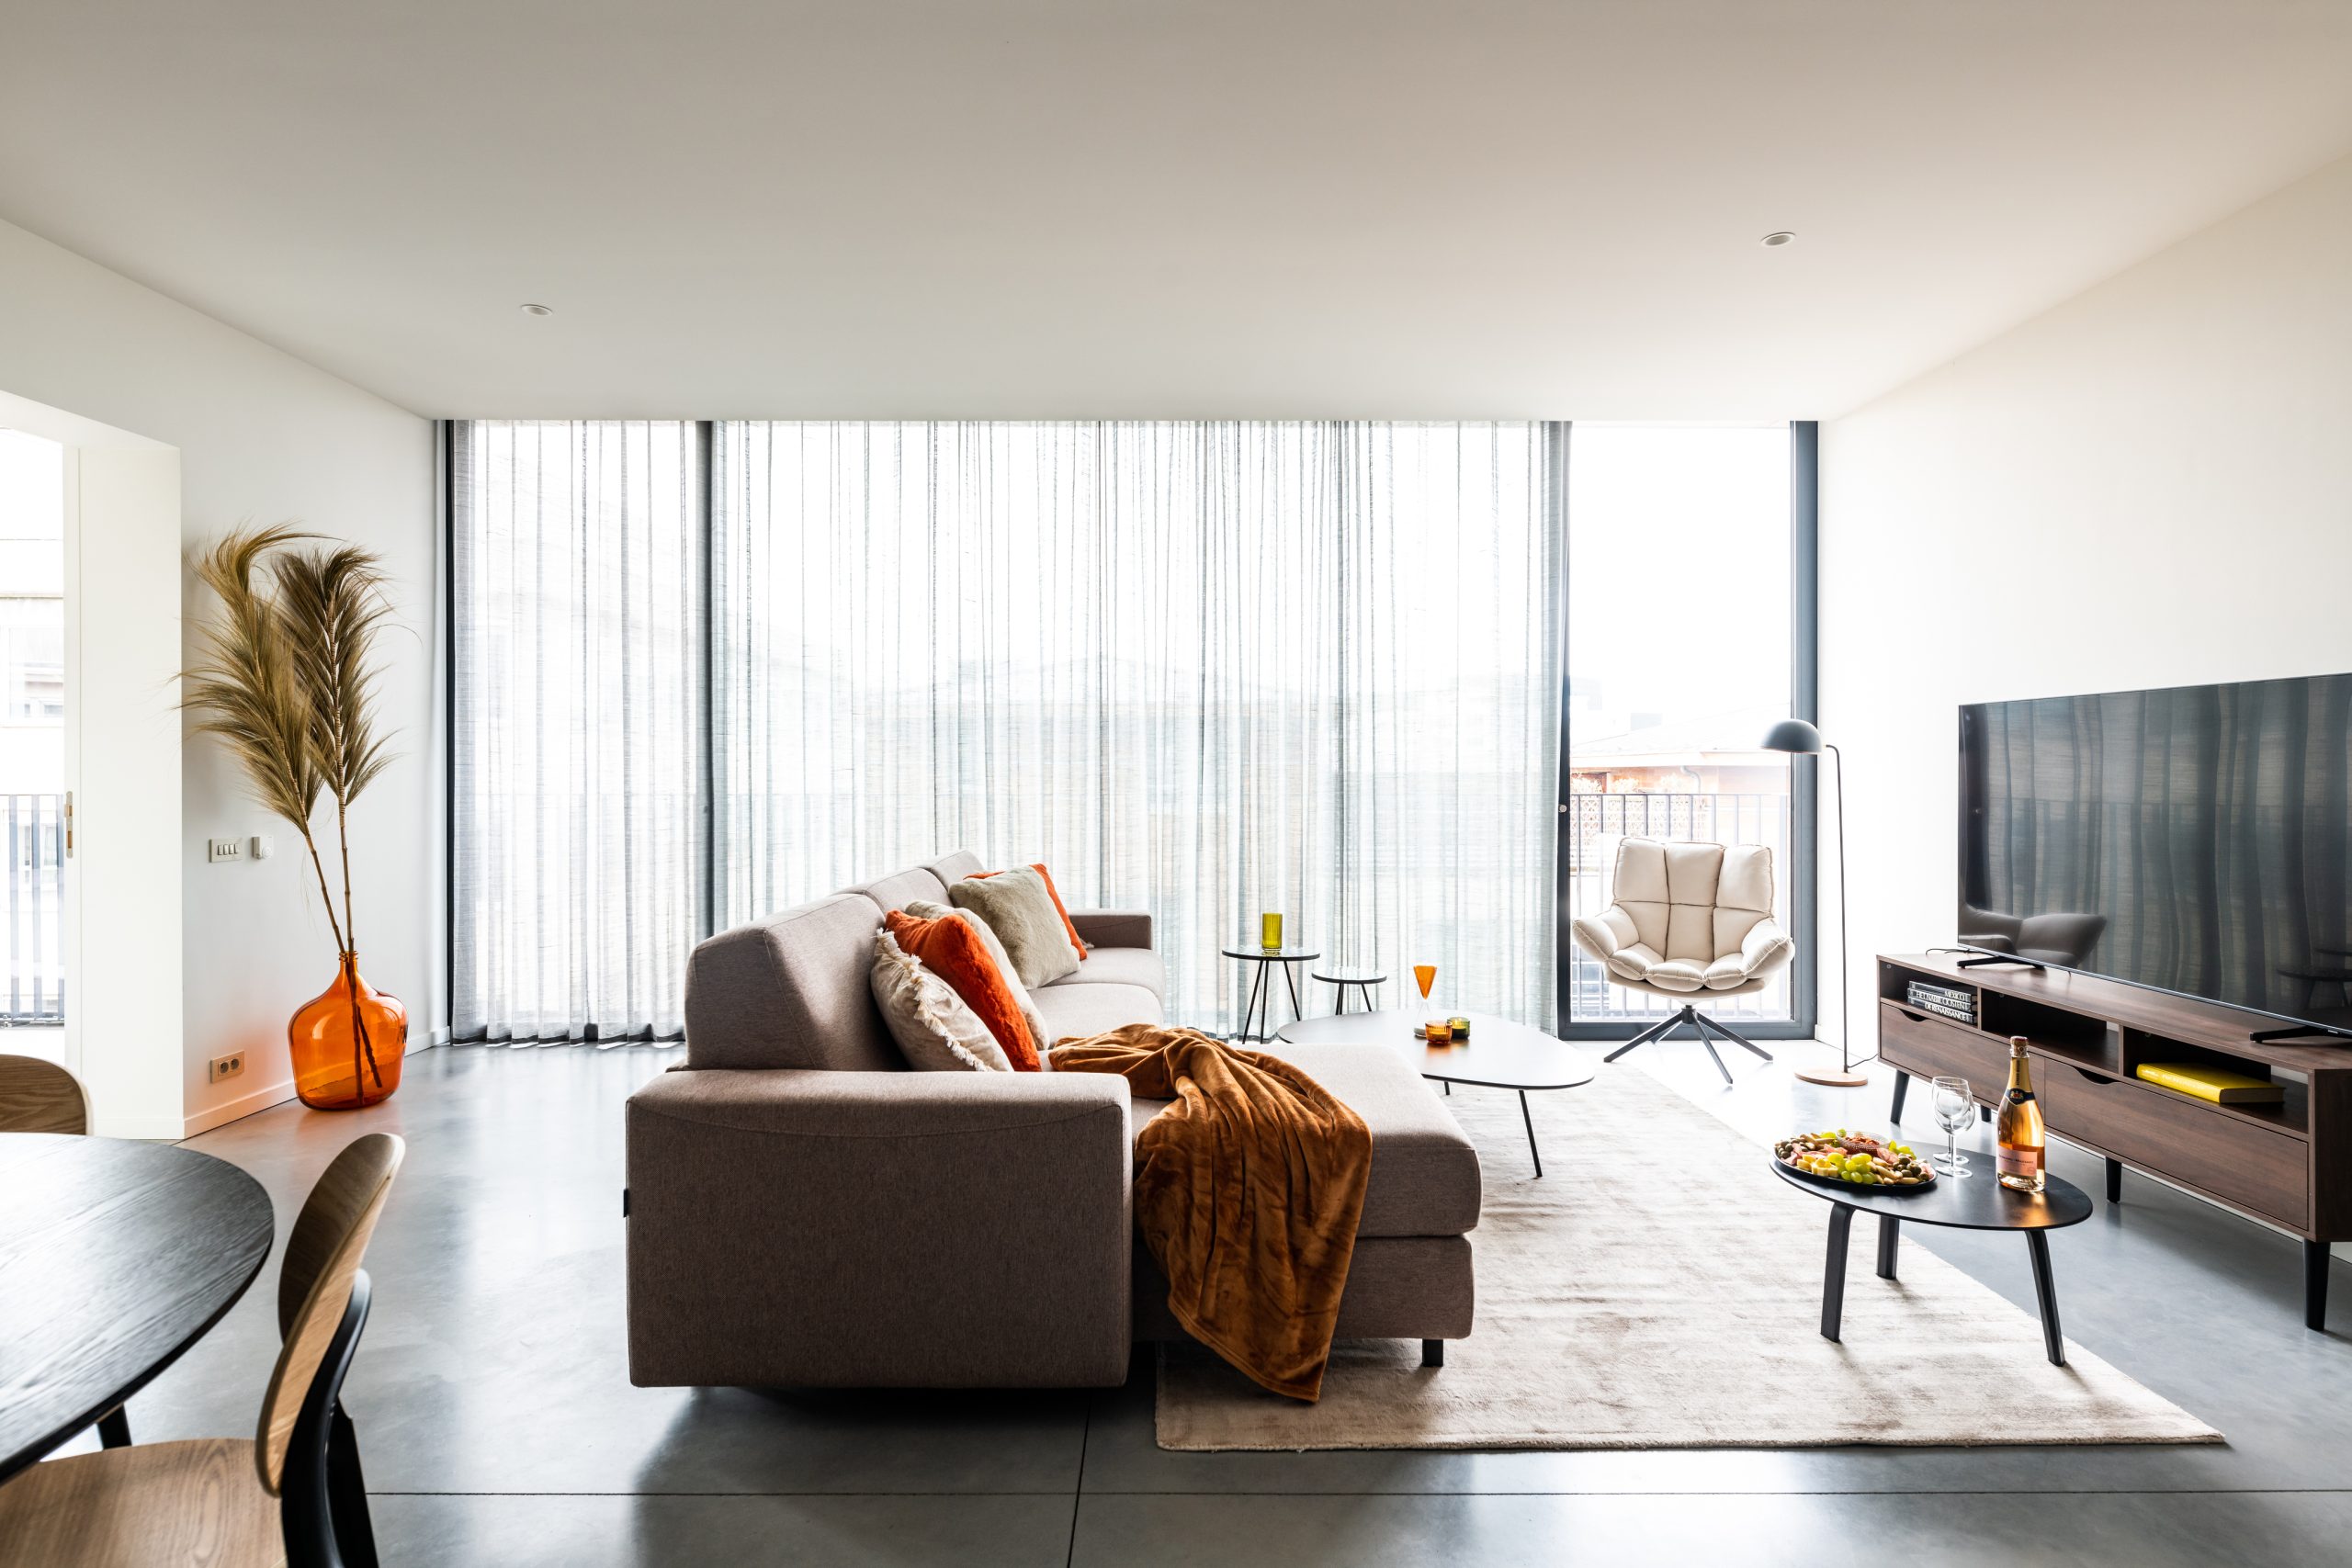 Livingroom 2-bedroom for rent in Brussels